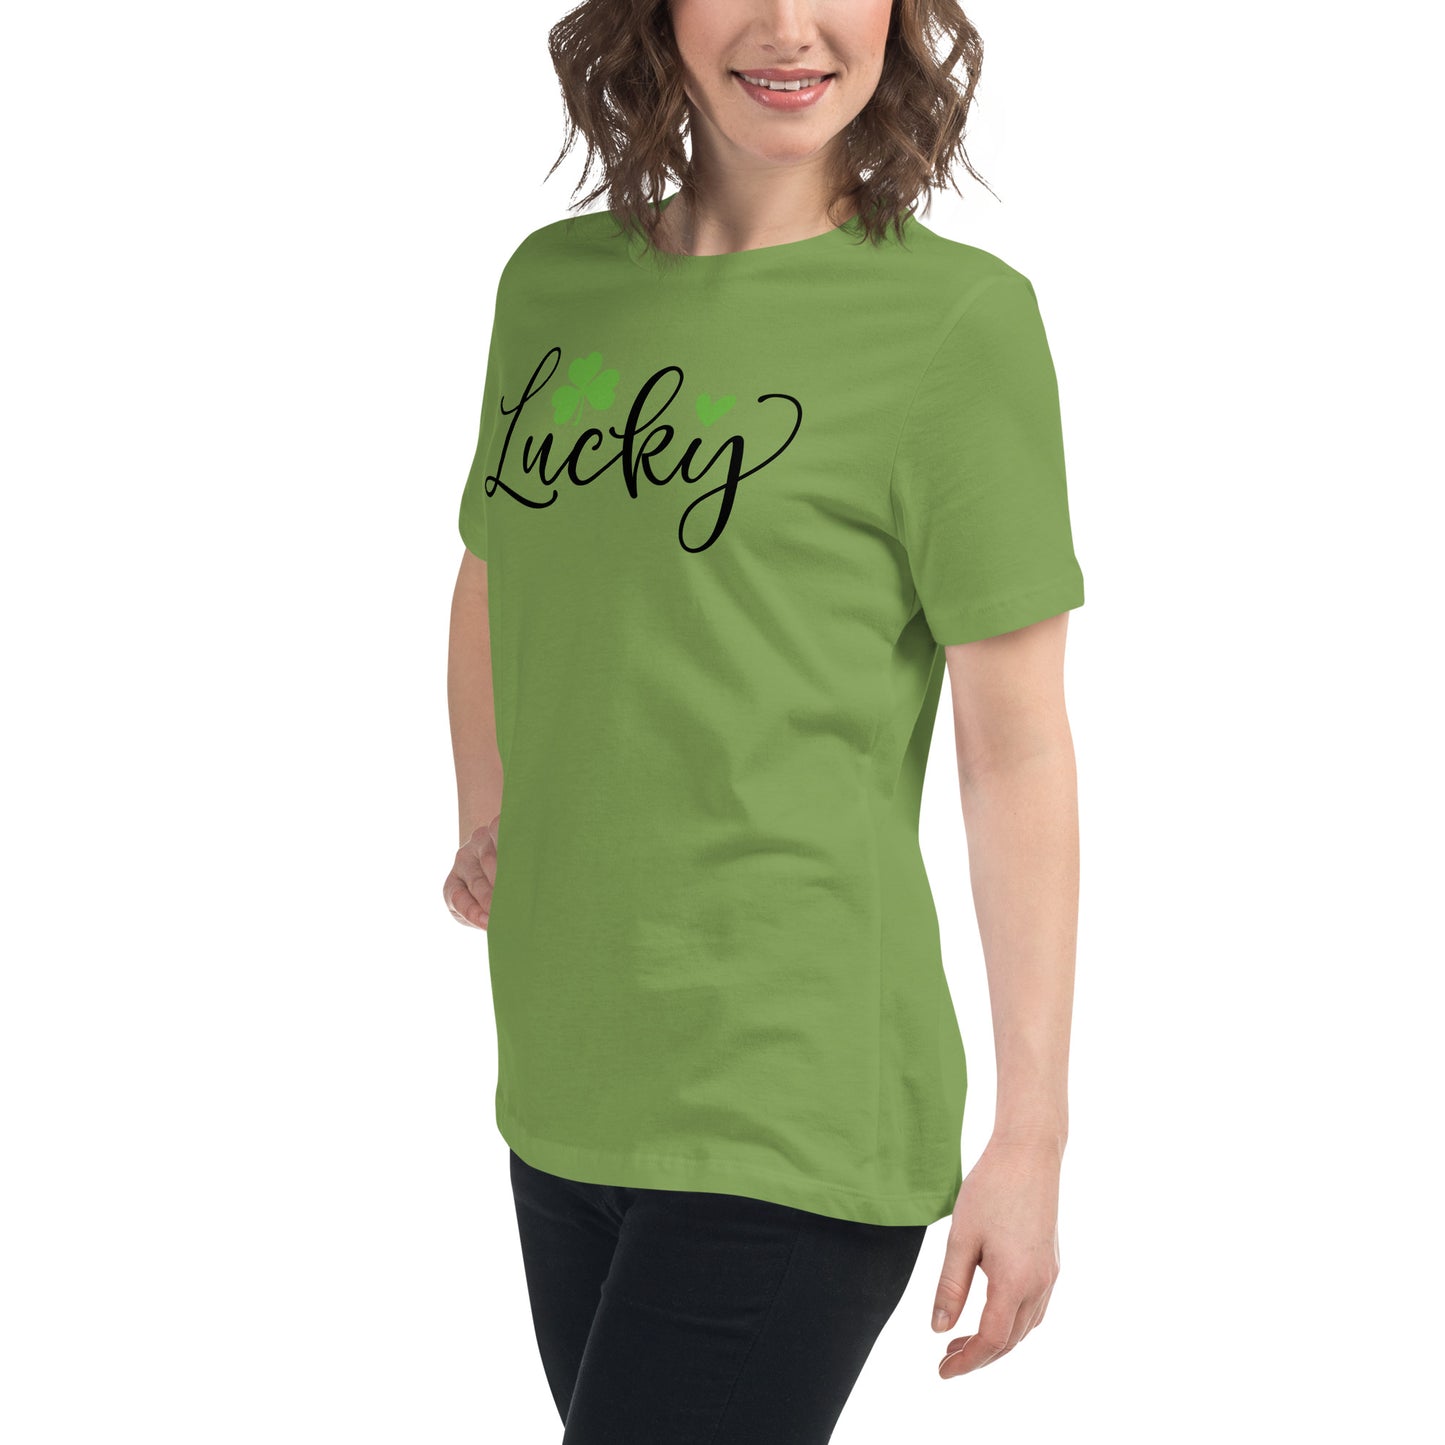 Women's Relaxed T-Shirt - St Patty's Day Lucky Clover